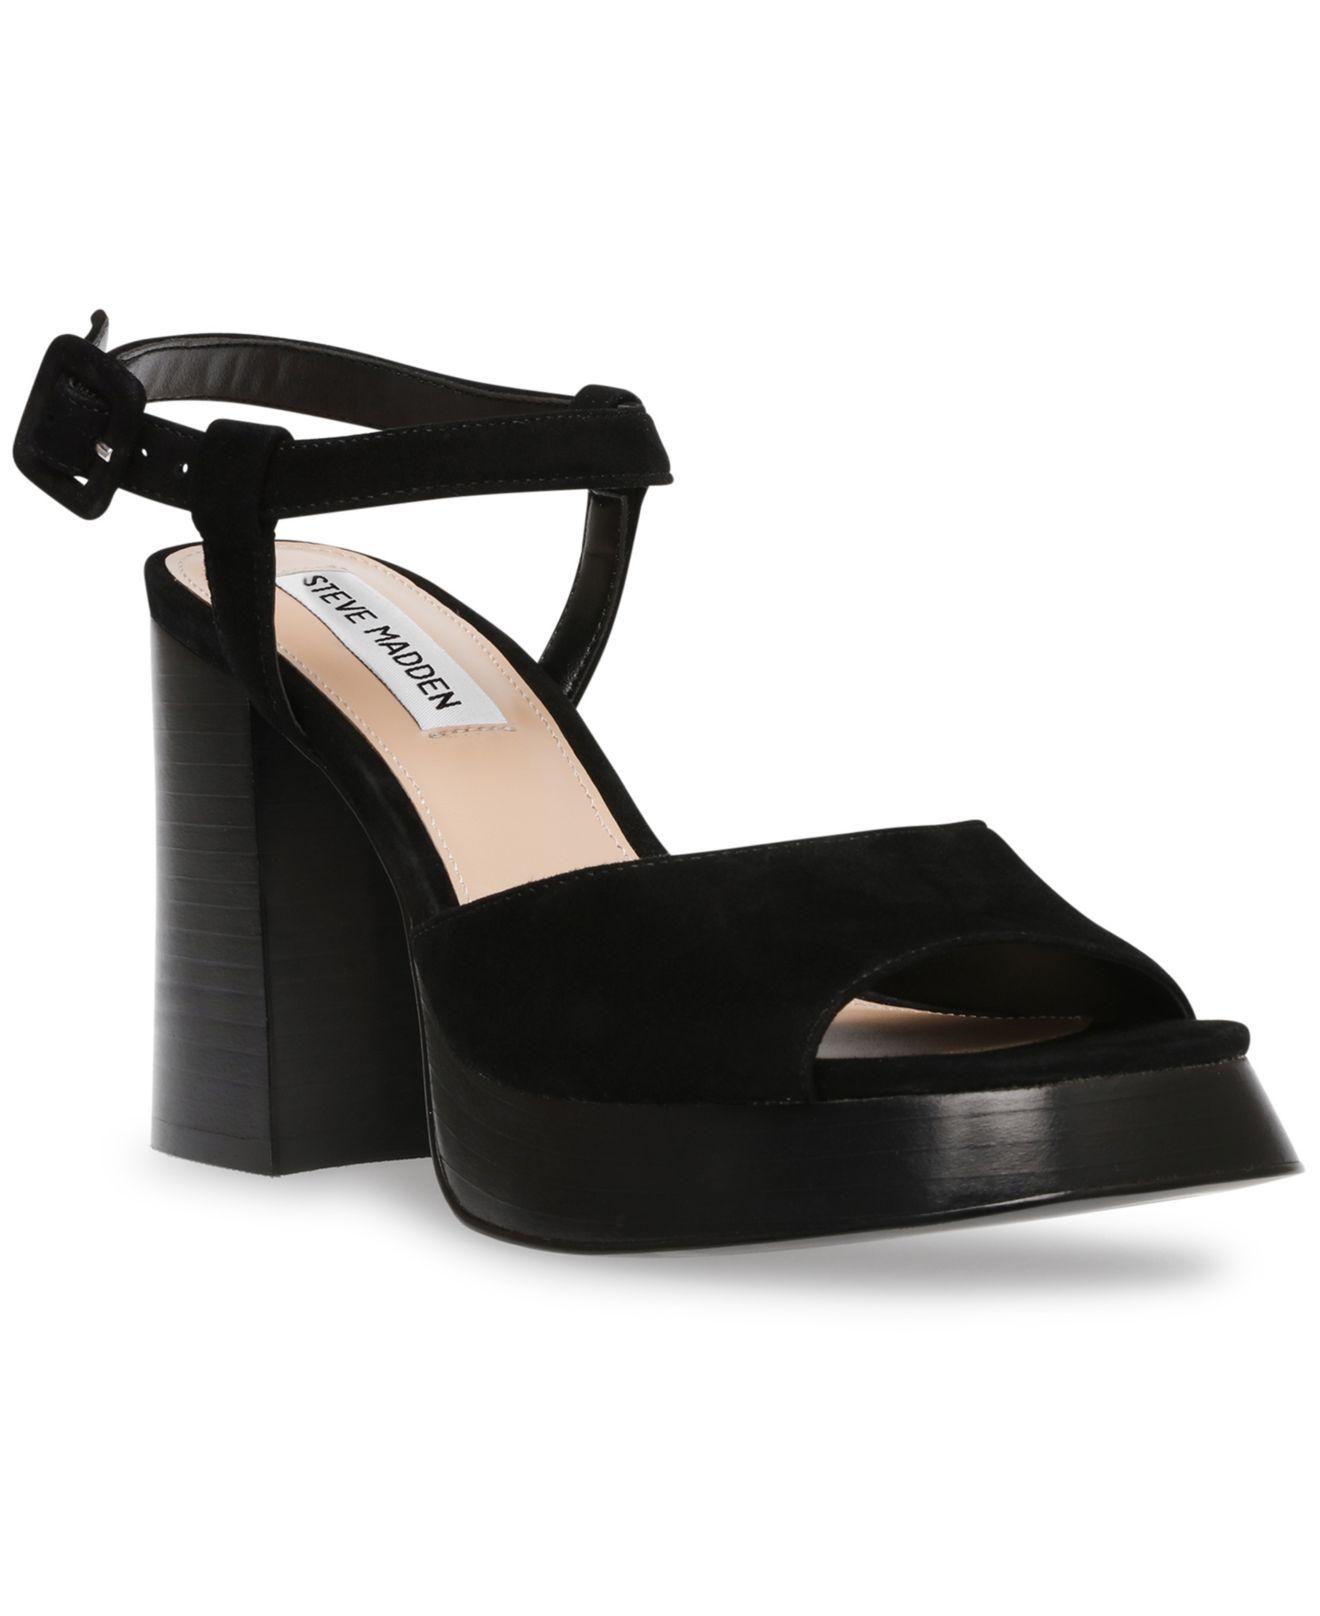 Steve Madden Inclusive Platform Sandals in Black | Lyst